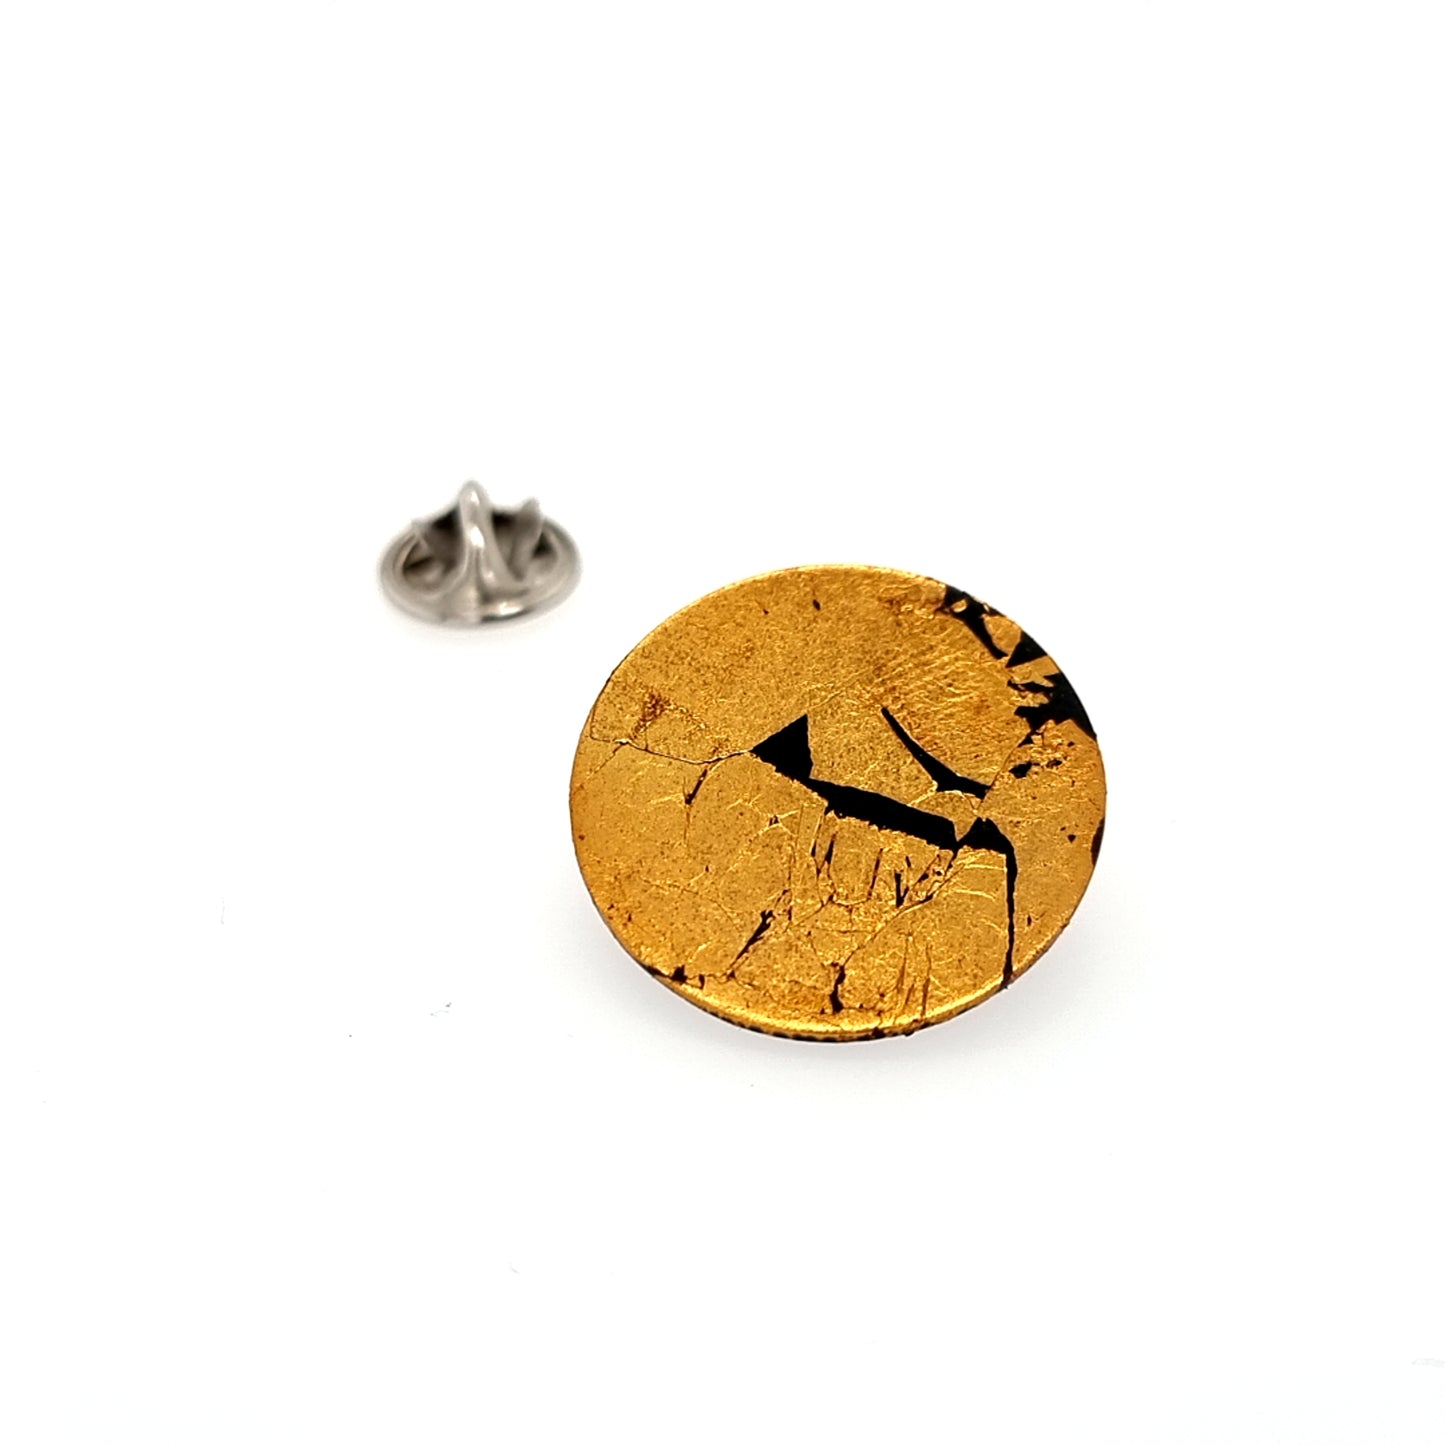 Haku-e Round Pin with 22k gold leaf